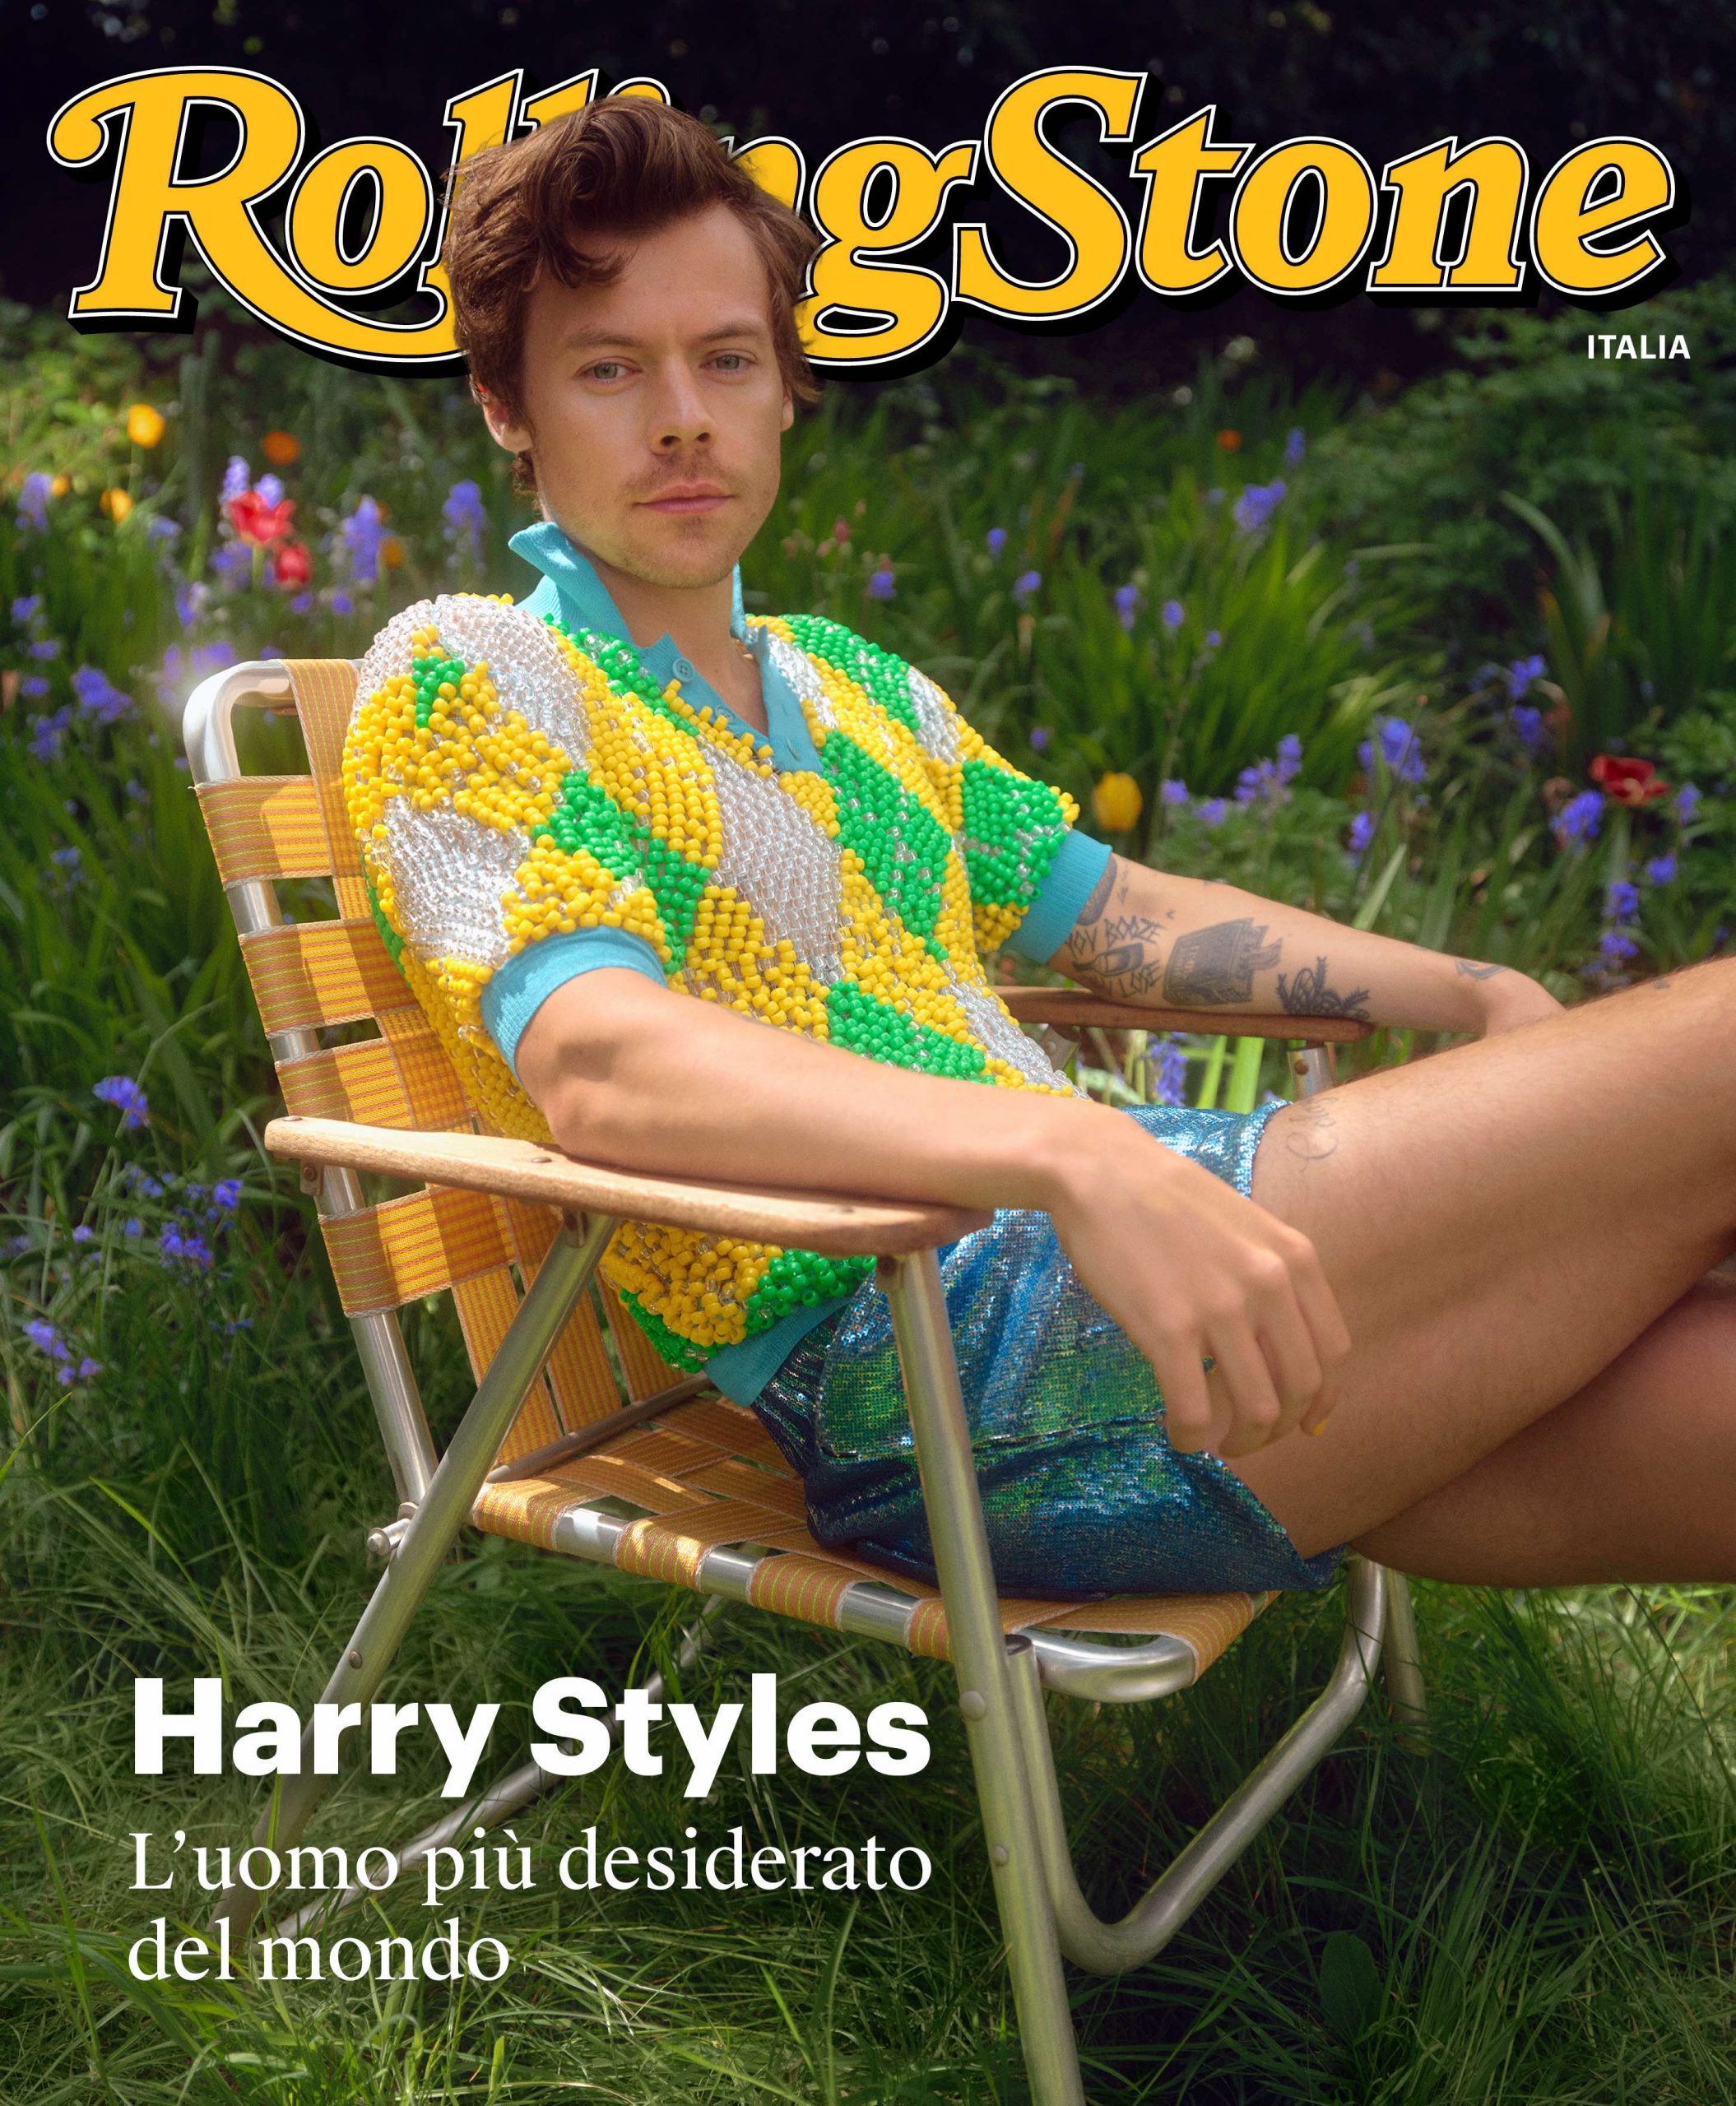 Harry Styles digital cover Rolling Stone Italia